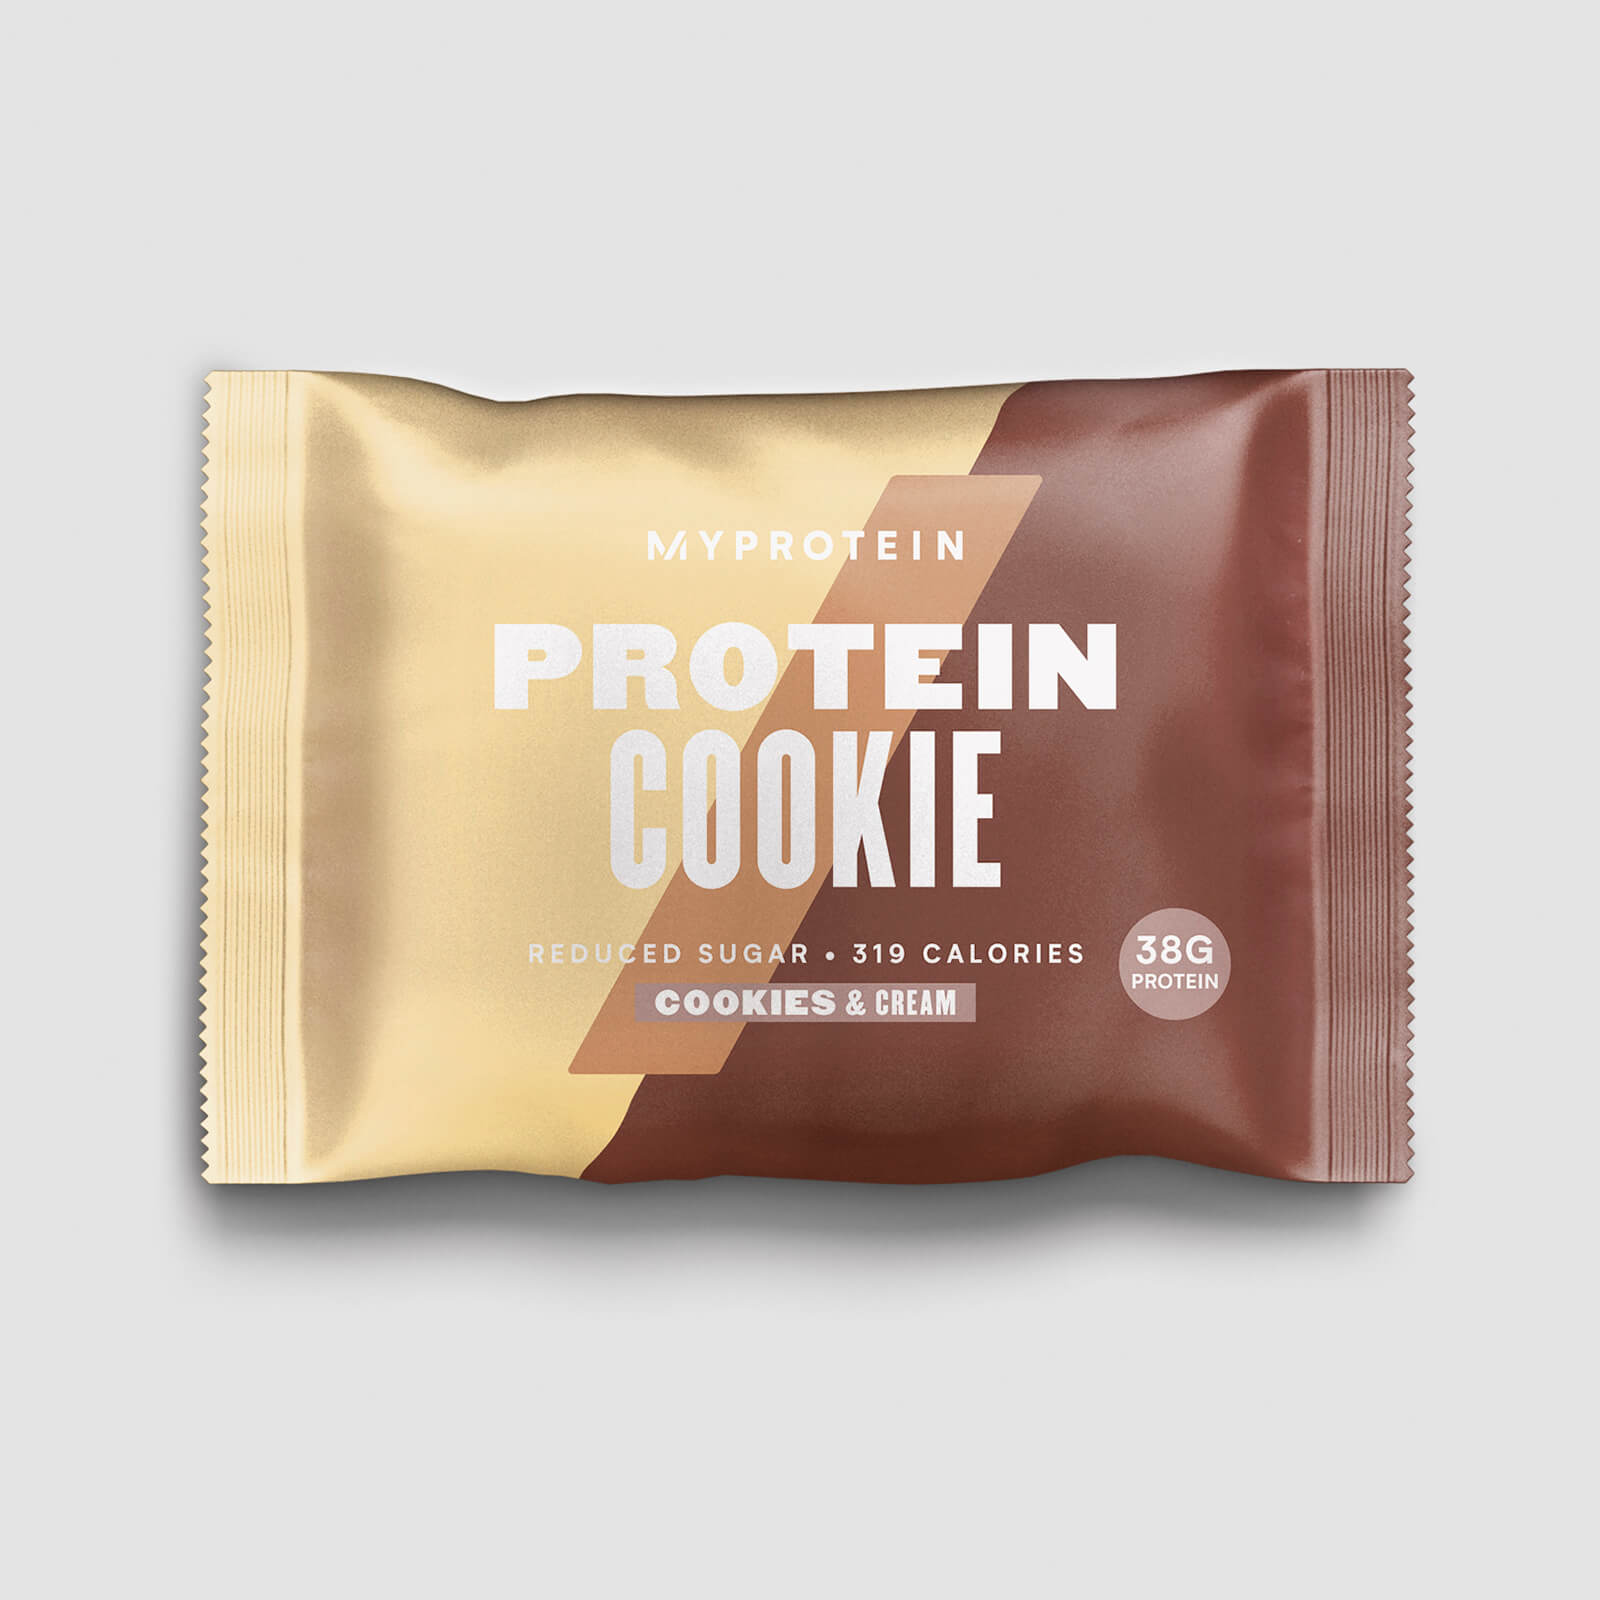 Myprotein Protein Cookie (smagsprøve) - Cookies & Cream